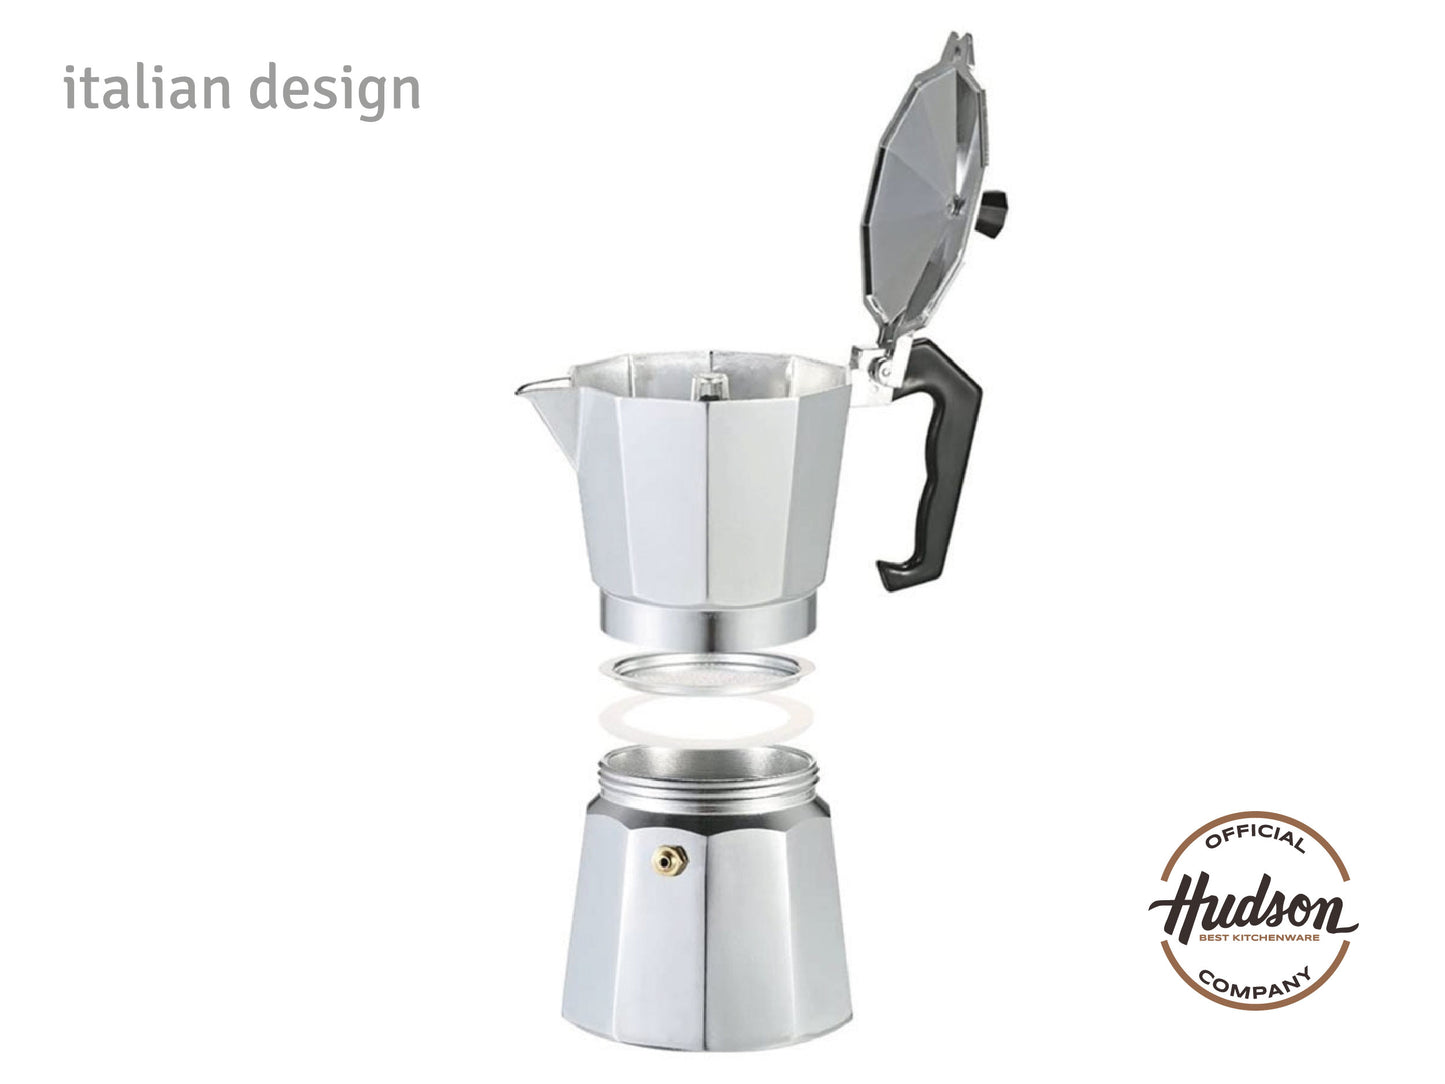 HUDSON Classic Aluminum Espresso Coffee Maker Italian Style 9 Cups Silver Polish